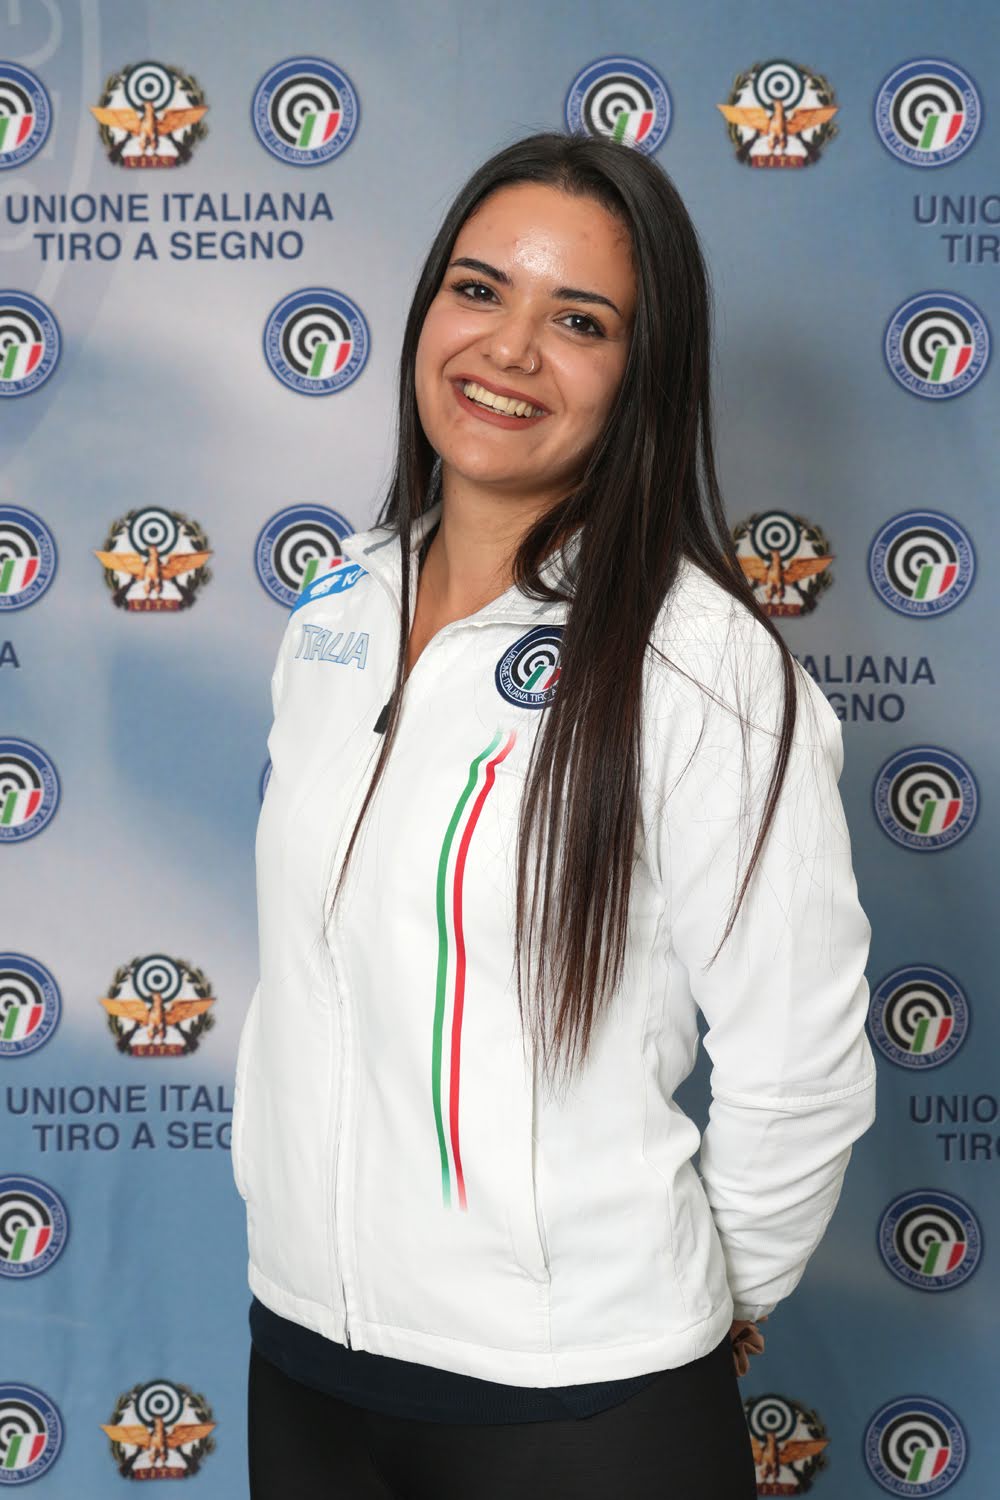 Giulia Mainetti